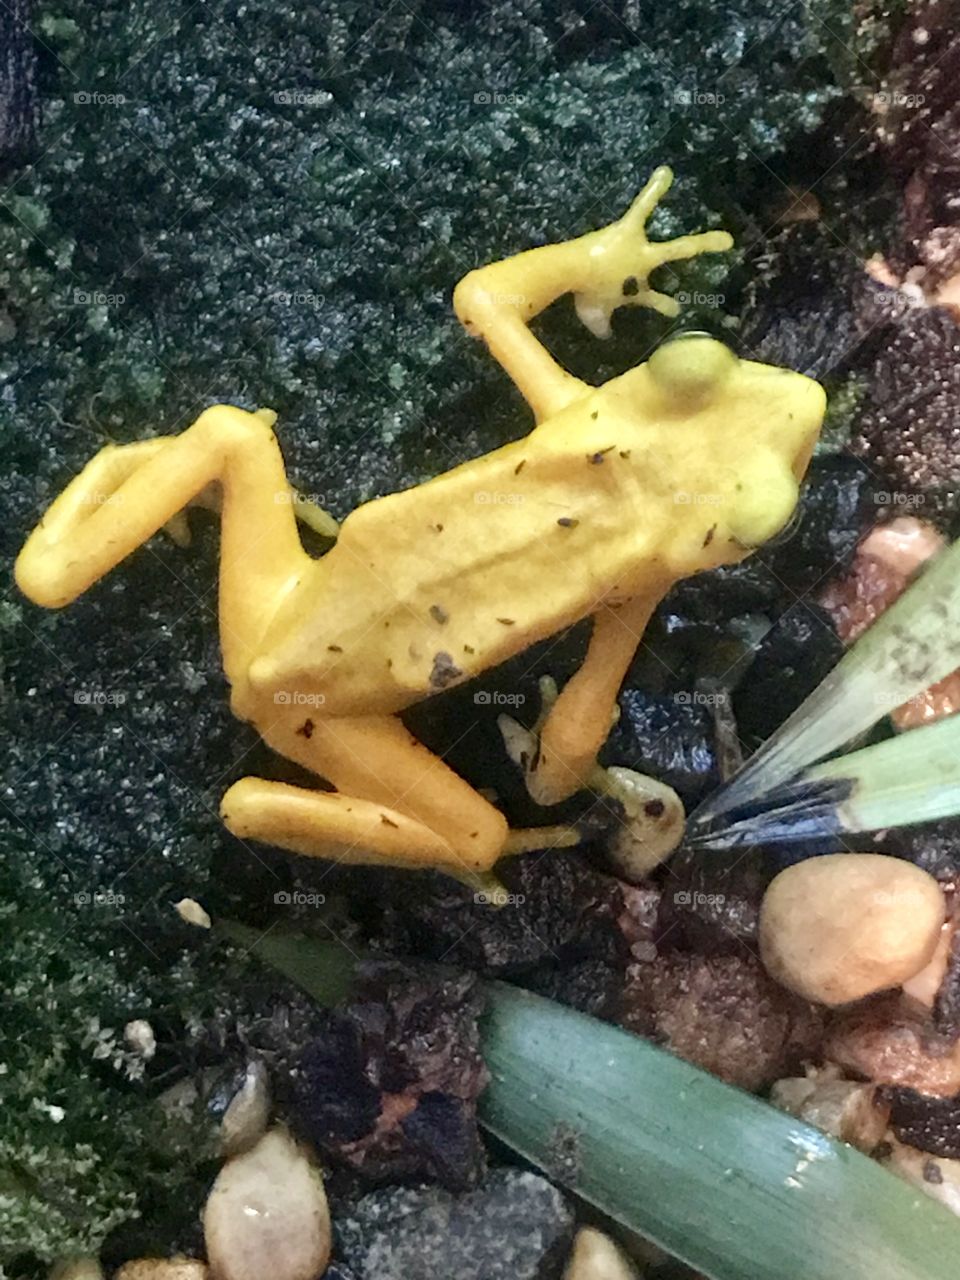 Aerial view of a bright yellow frog sitting motionless in his aquarium habitat